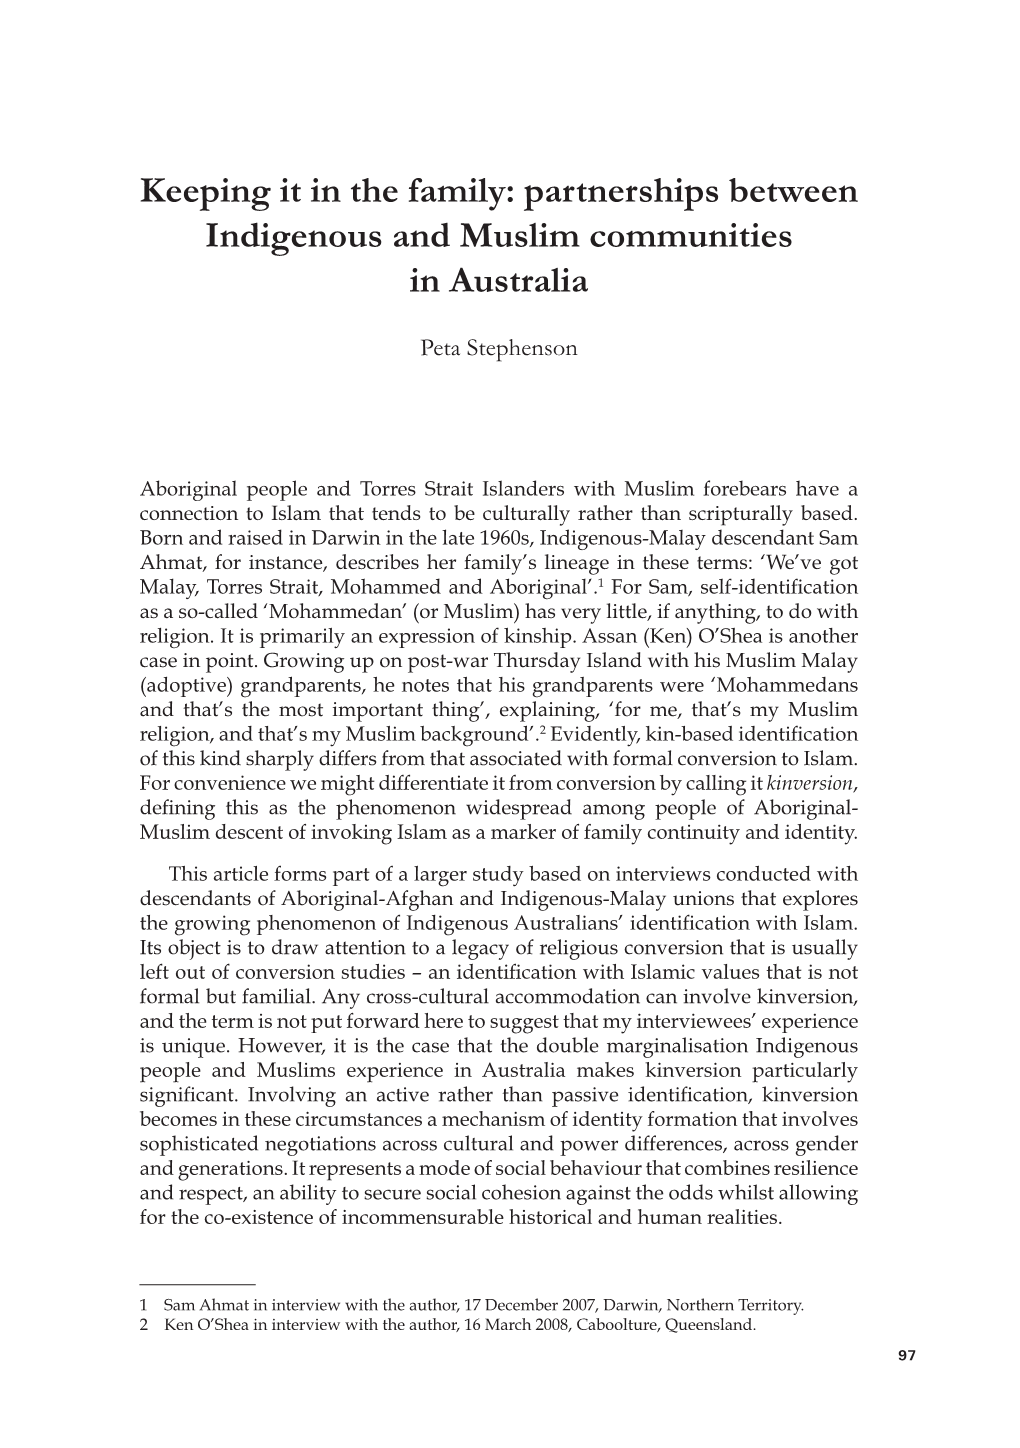 Partnerships Between Indigenous and Muslim Communities in Australia